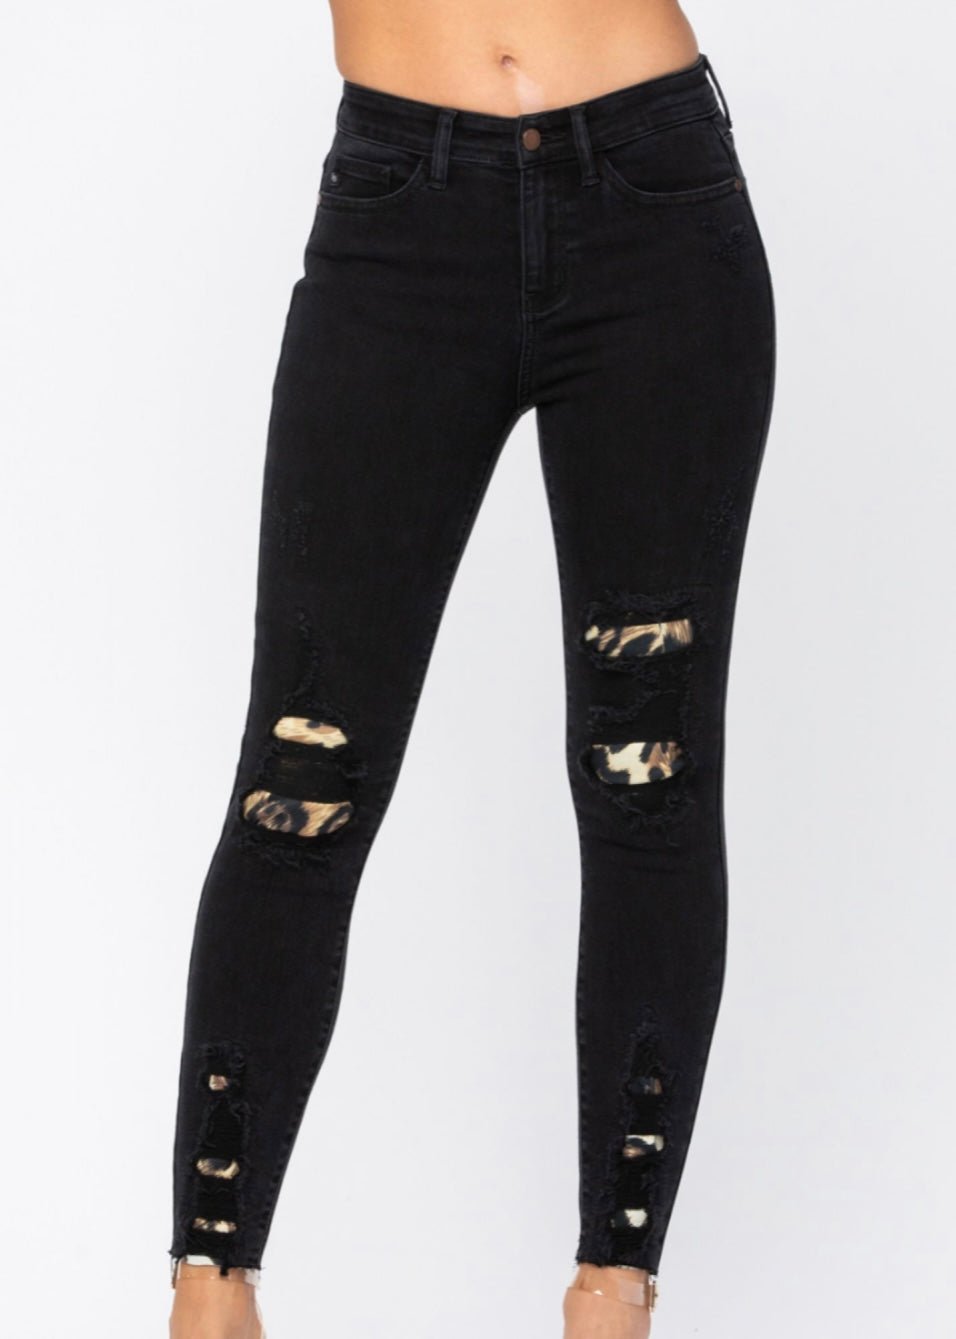 Judy Blue Karma Black Destroyed Leopard Patch Skinny Jeans - jeans - Jimberly's Boutique